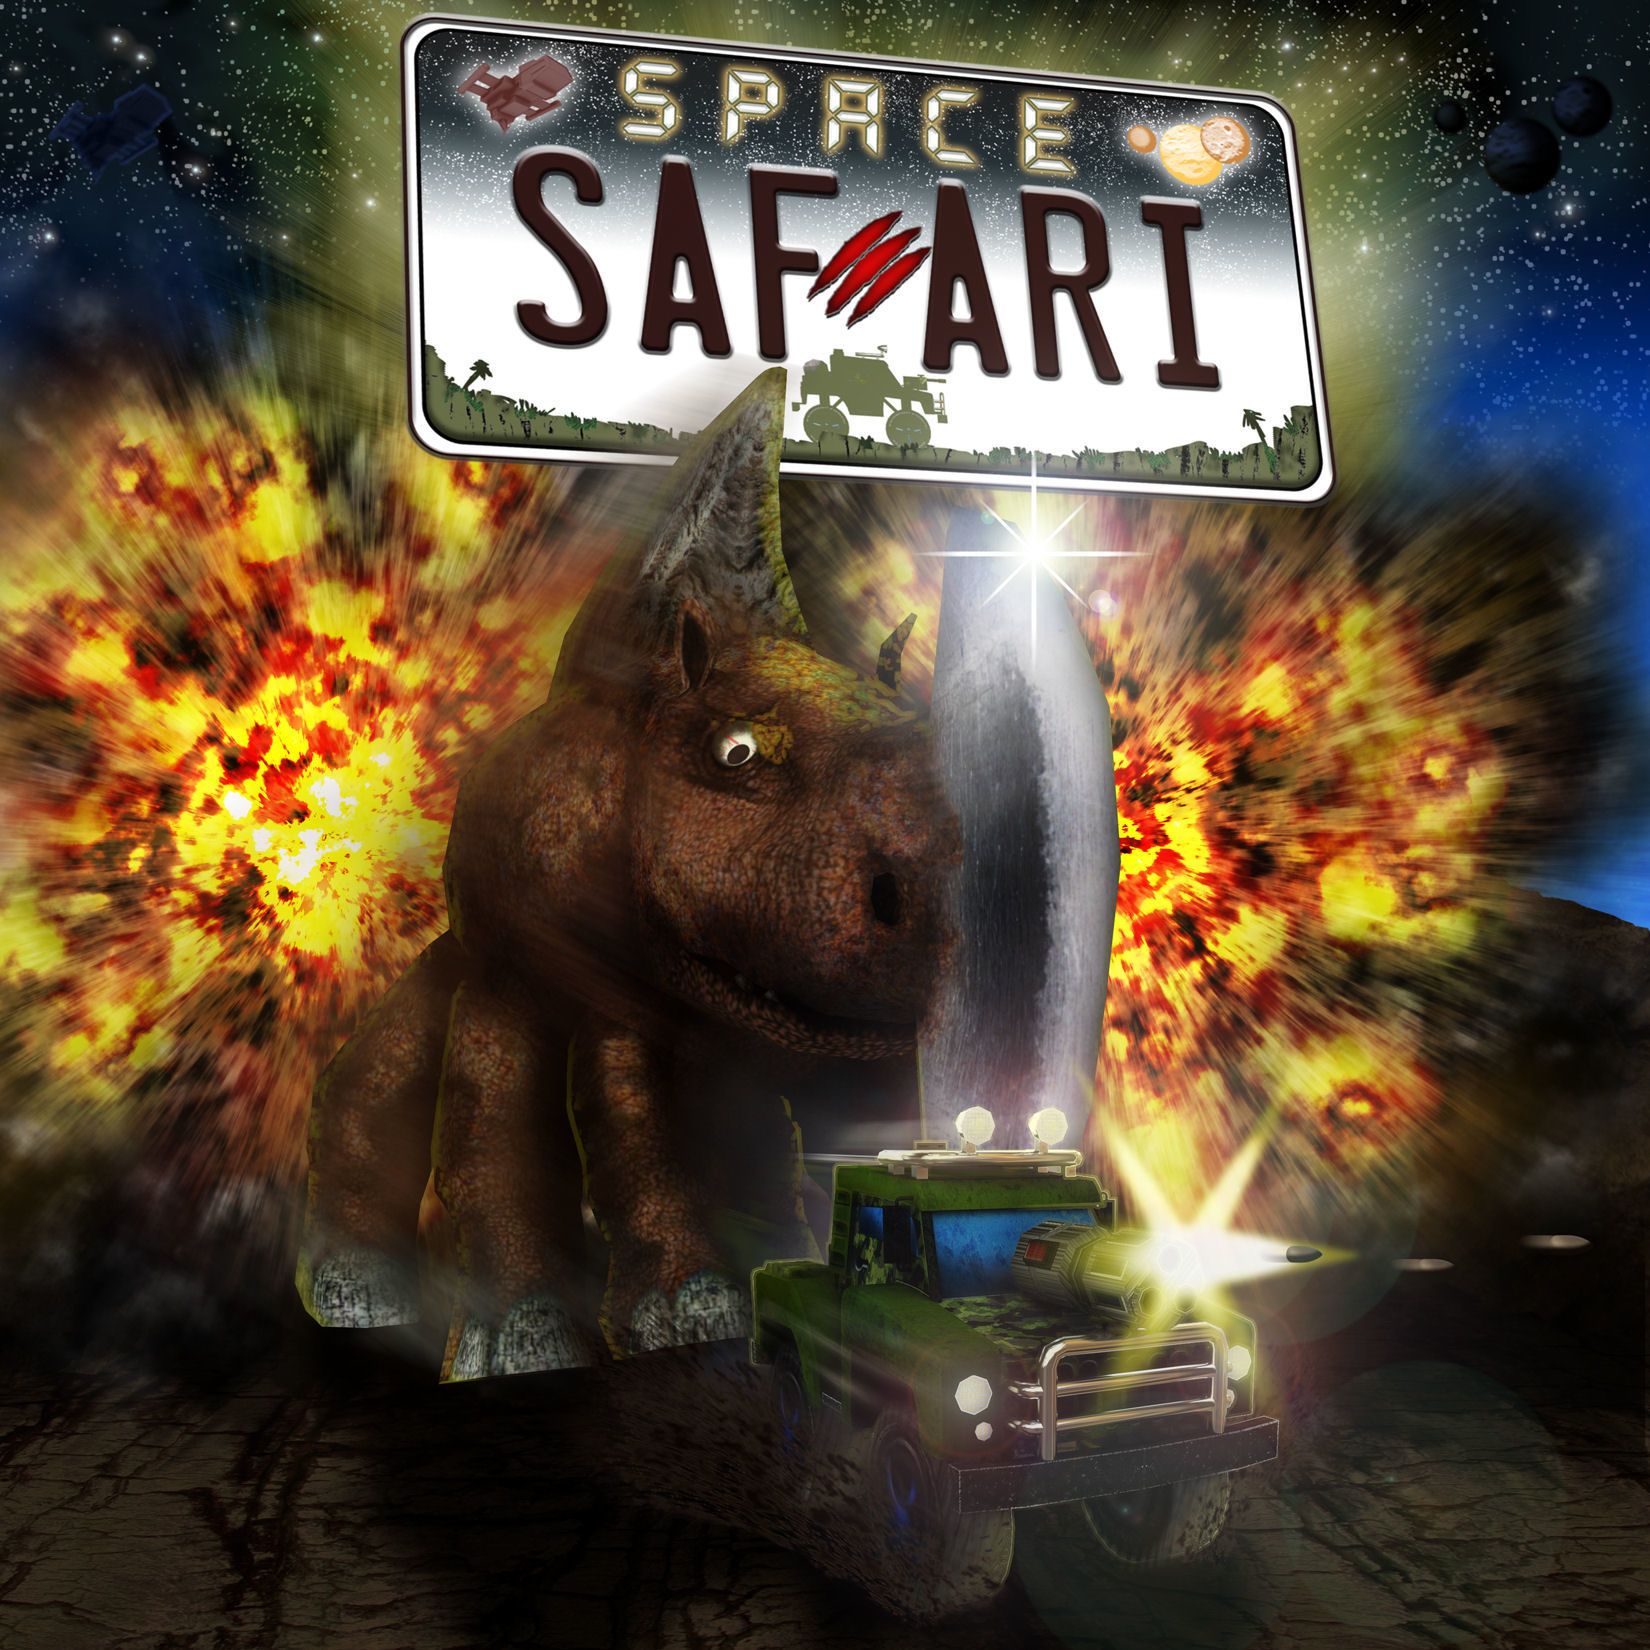 space safari 2022